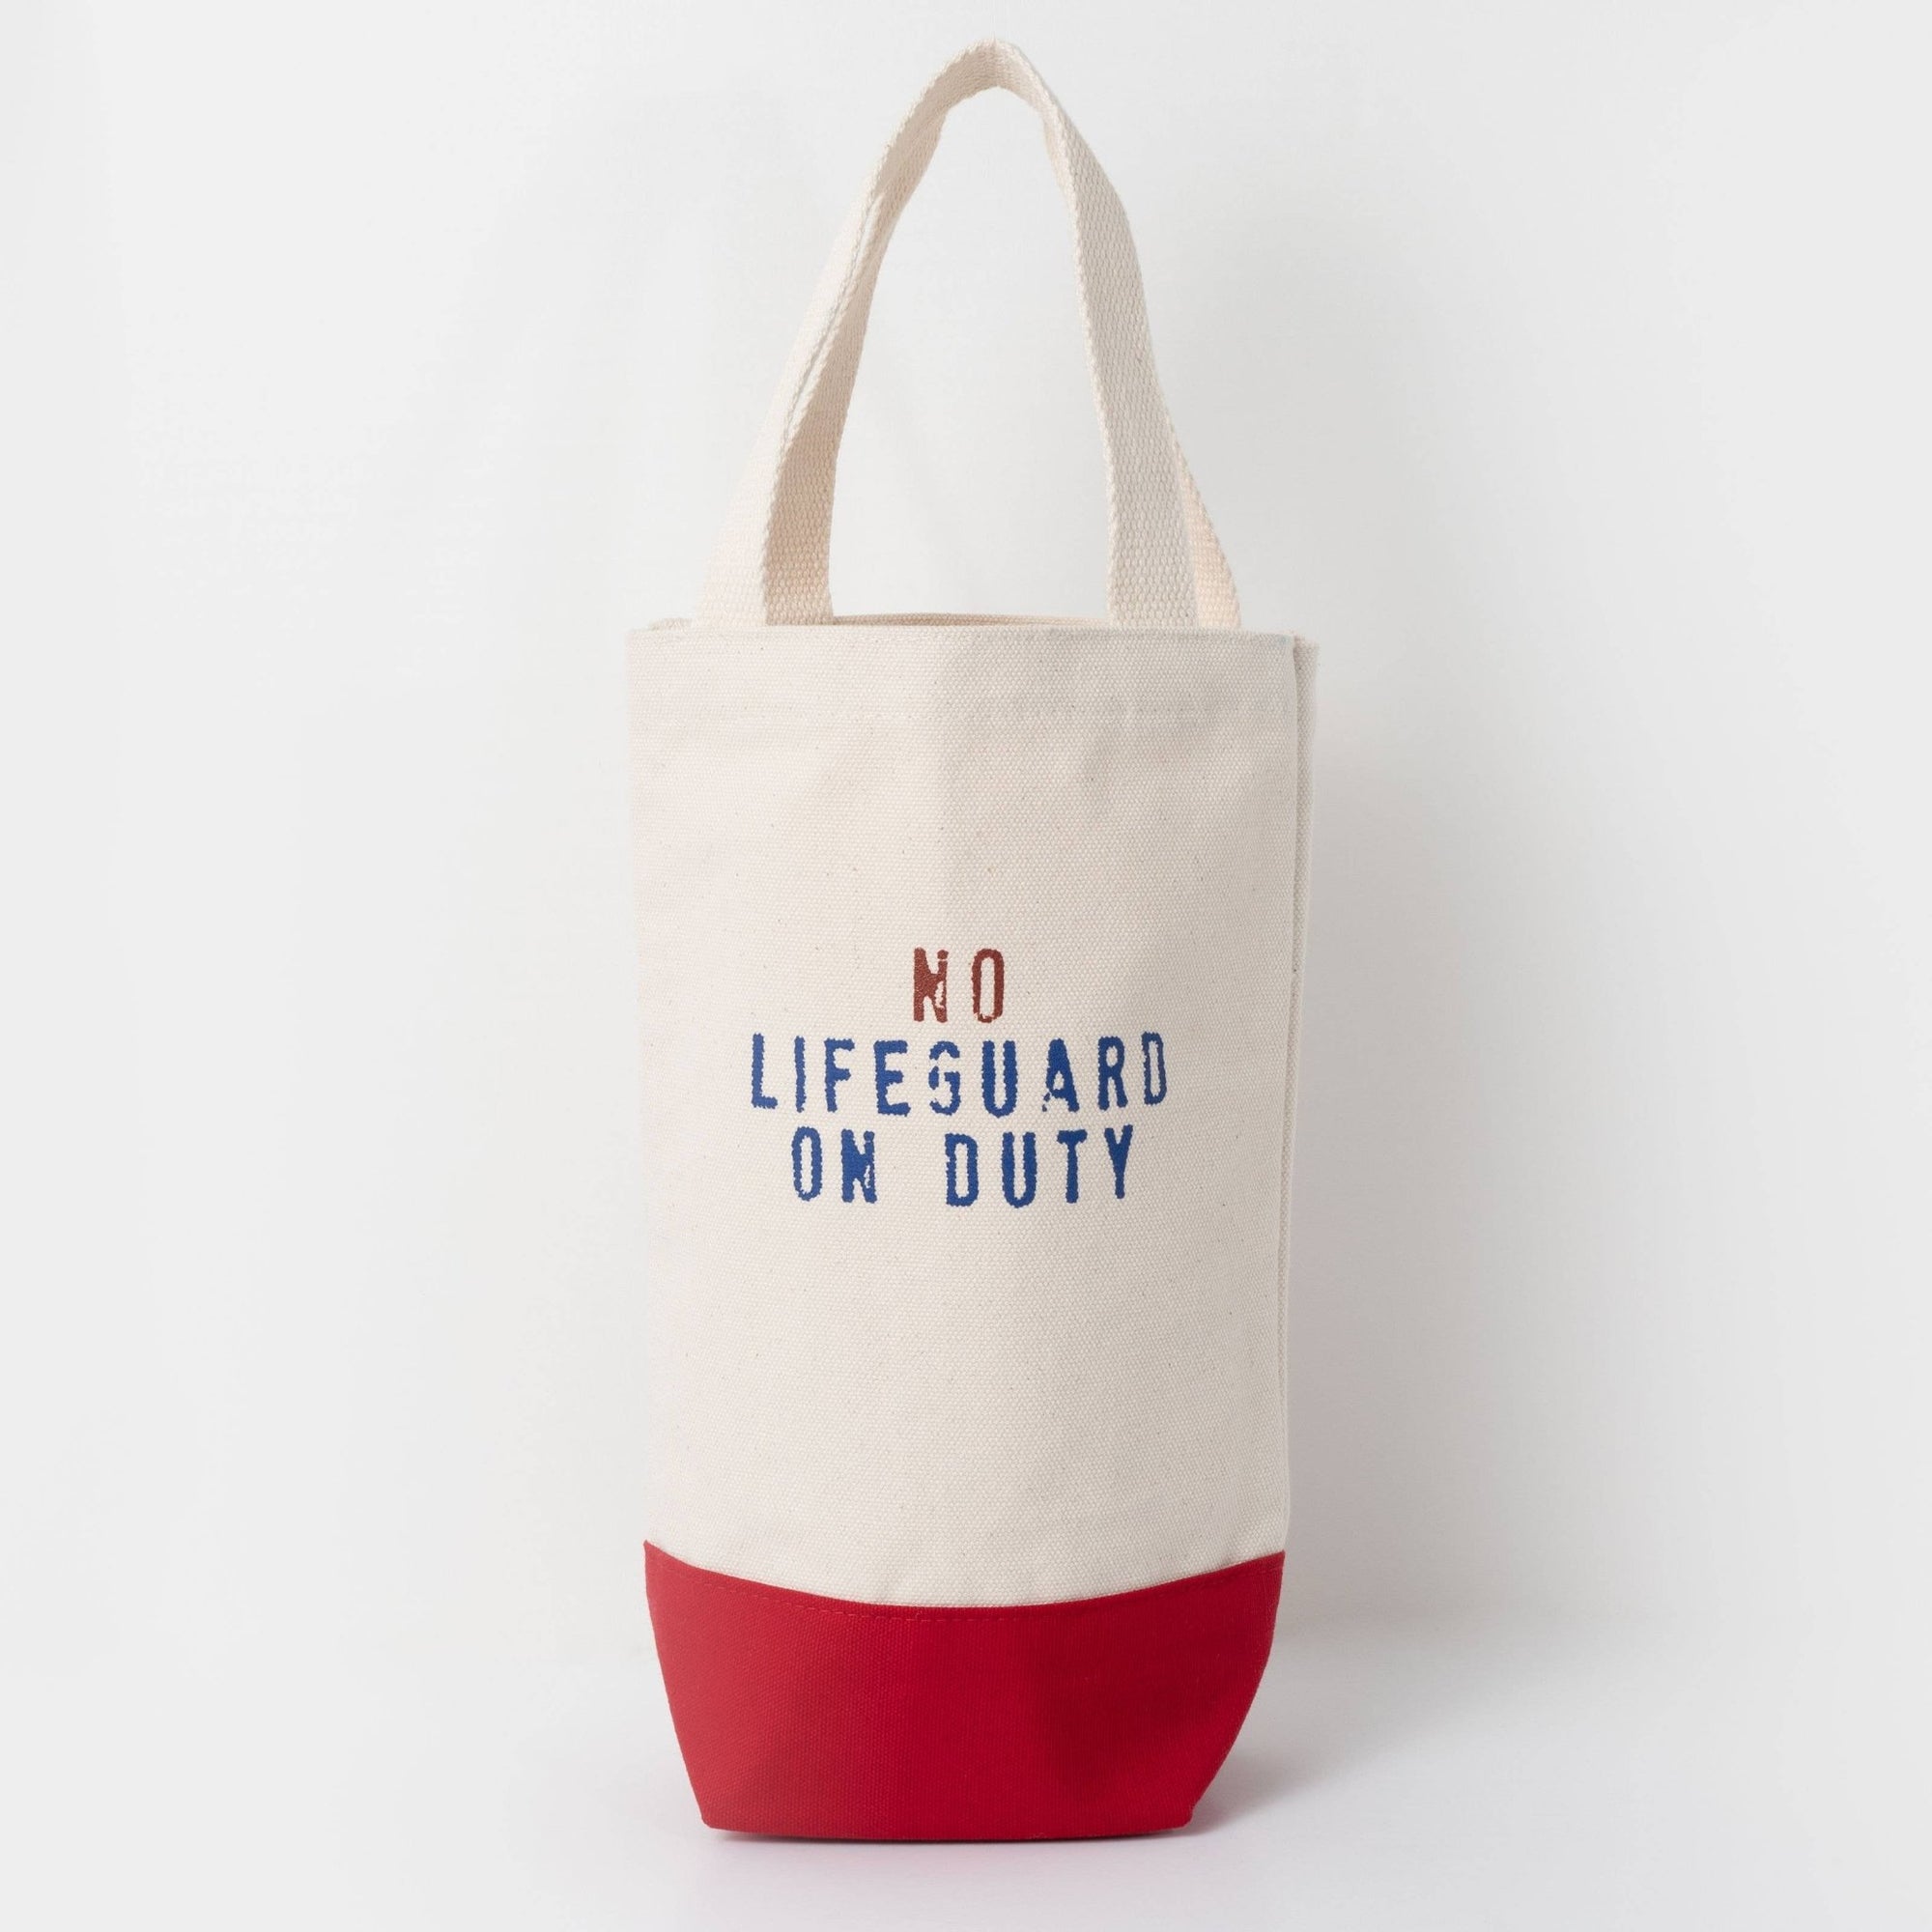 No Lifeguard Wine Tote, Canvas Bag - Abigail Fox Designs